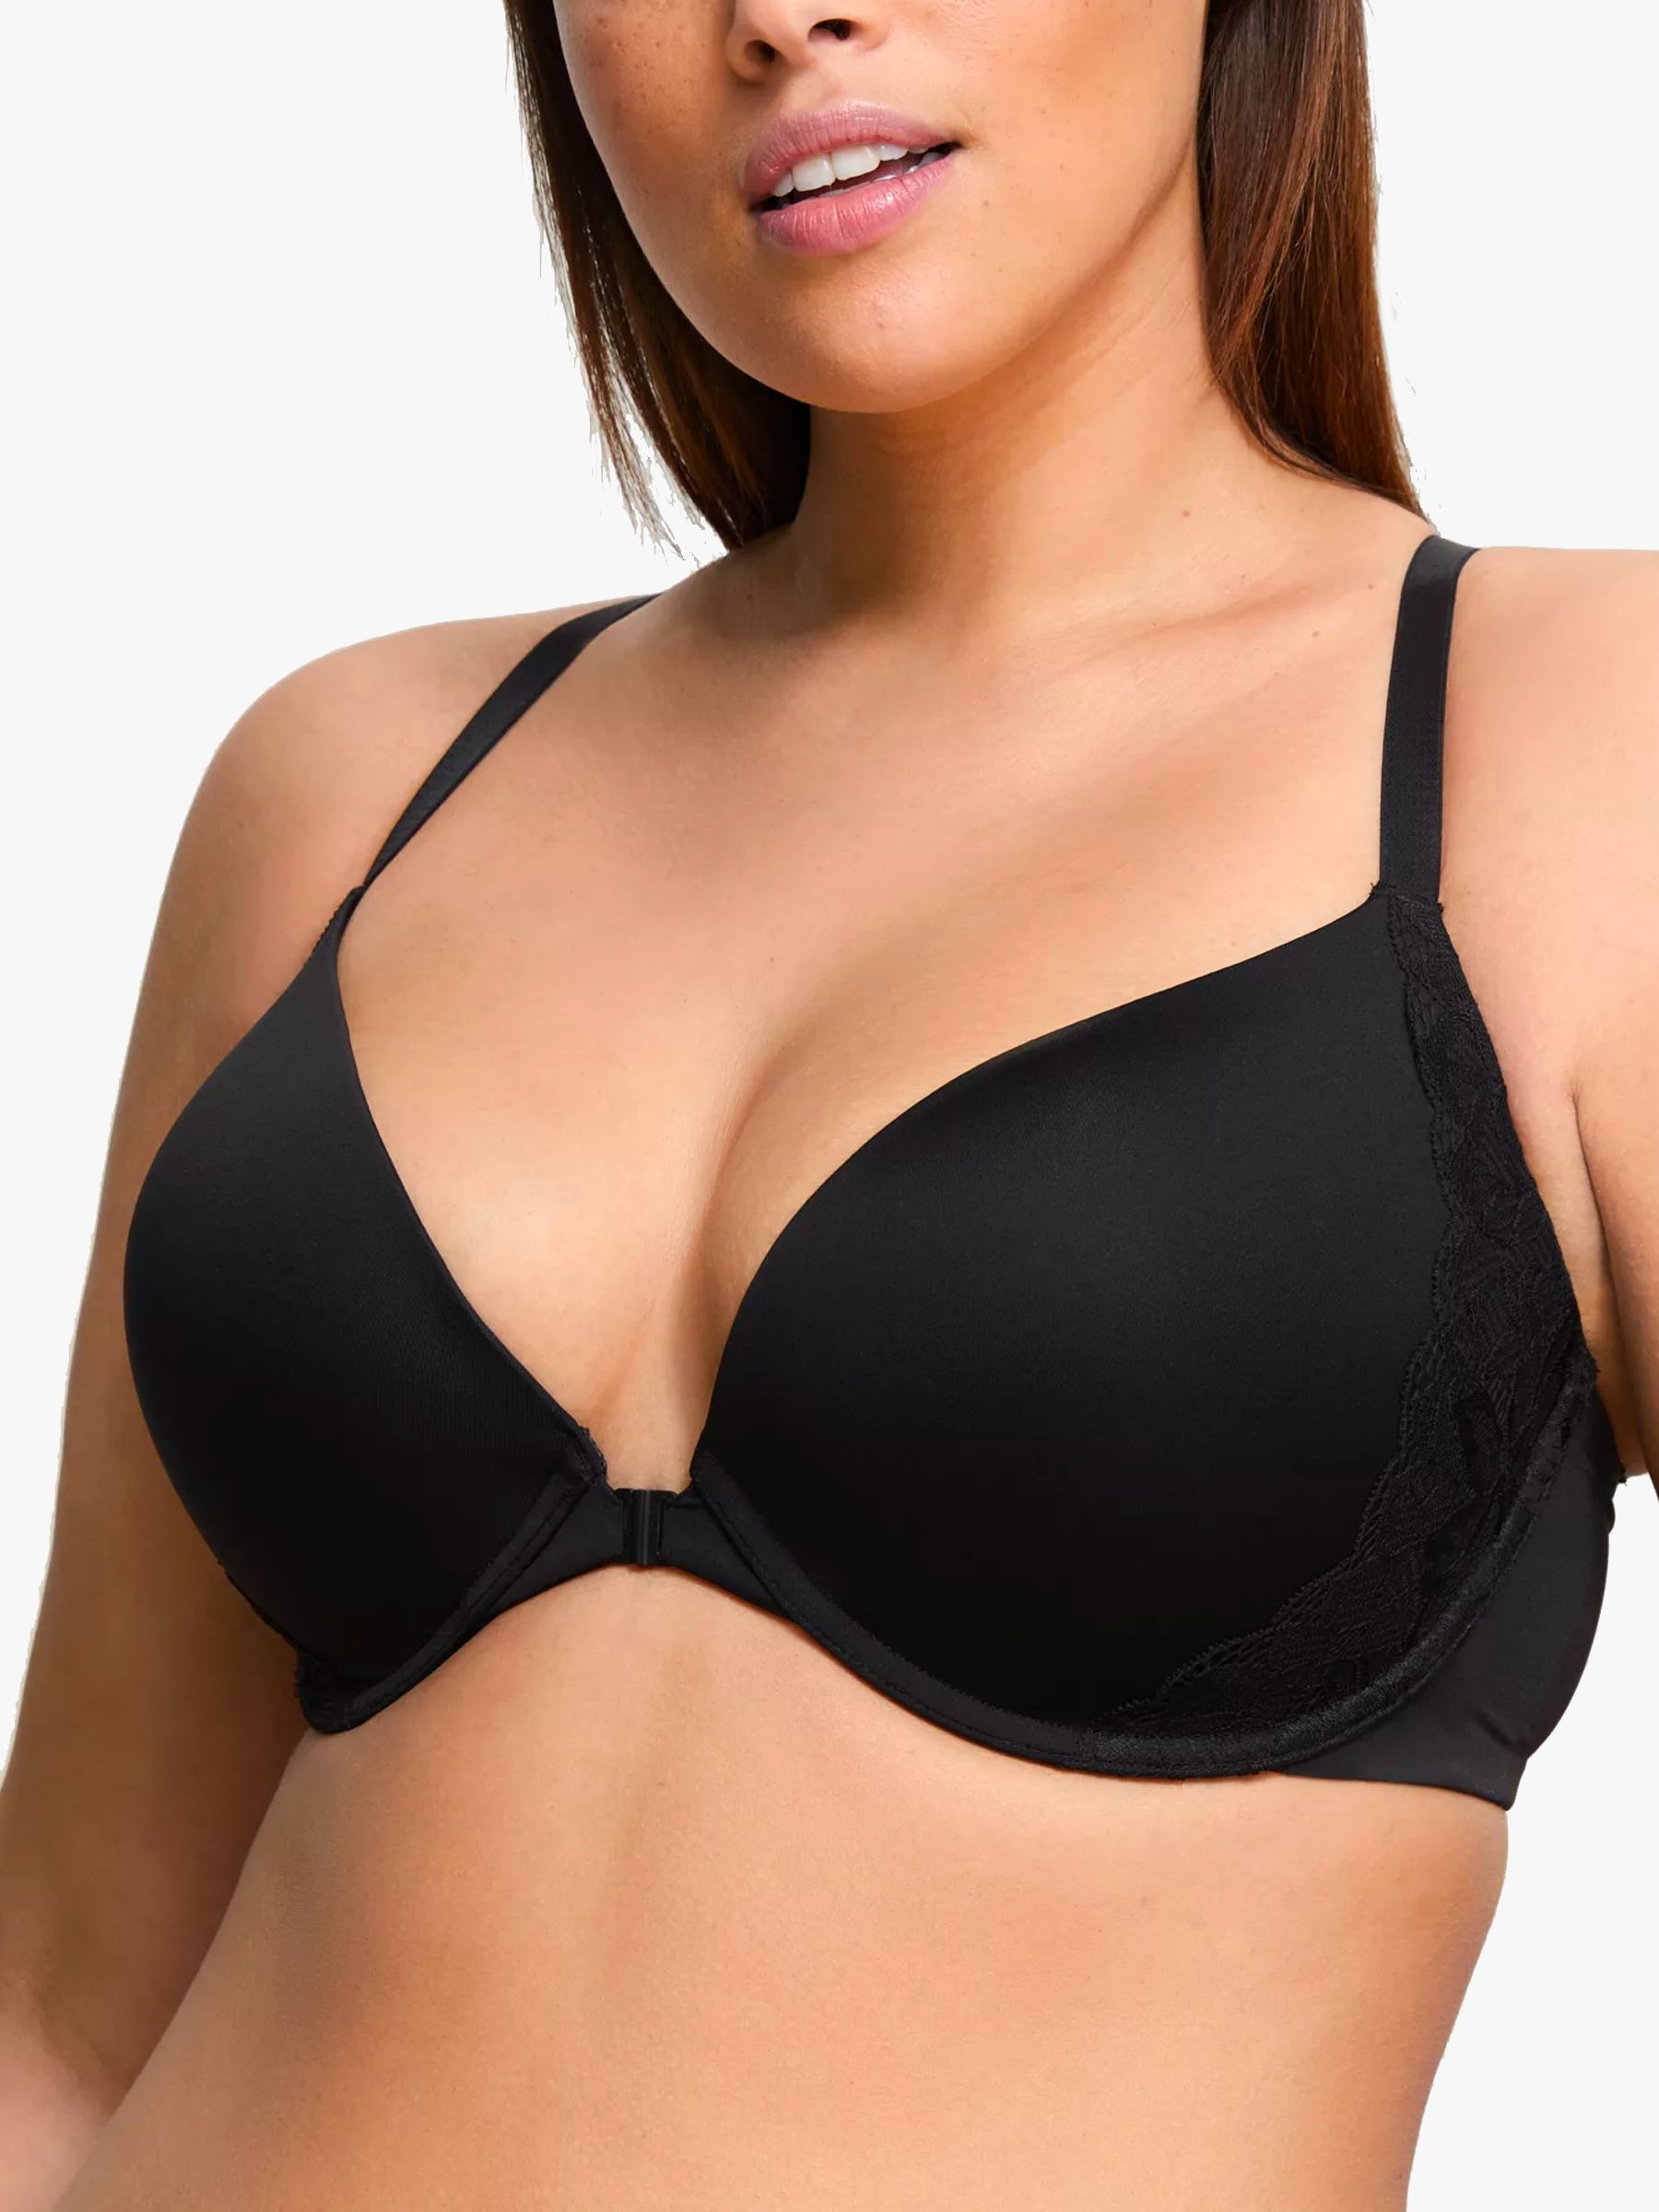 BIGGER FULLER 34C TITS cleavage breast cream increase boobs bra push up  enhance